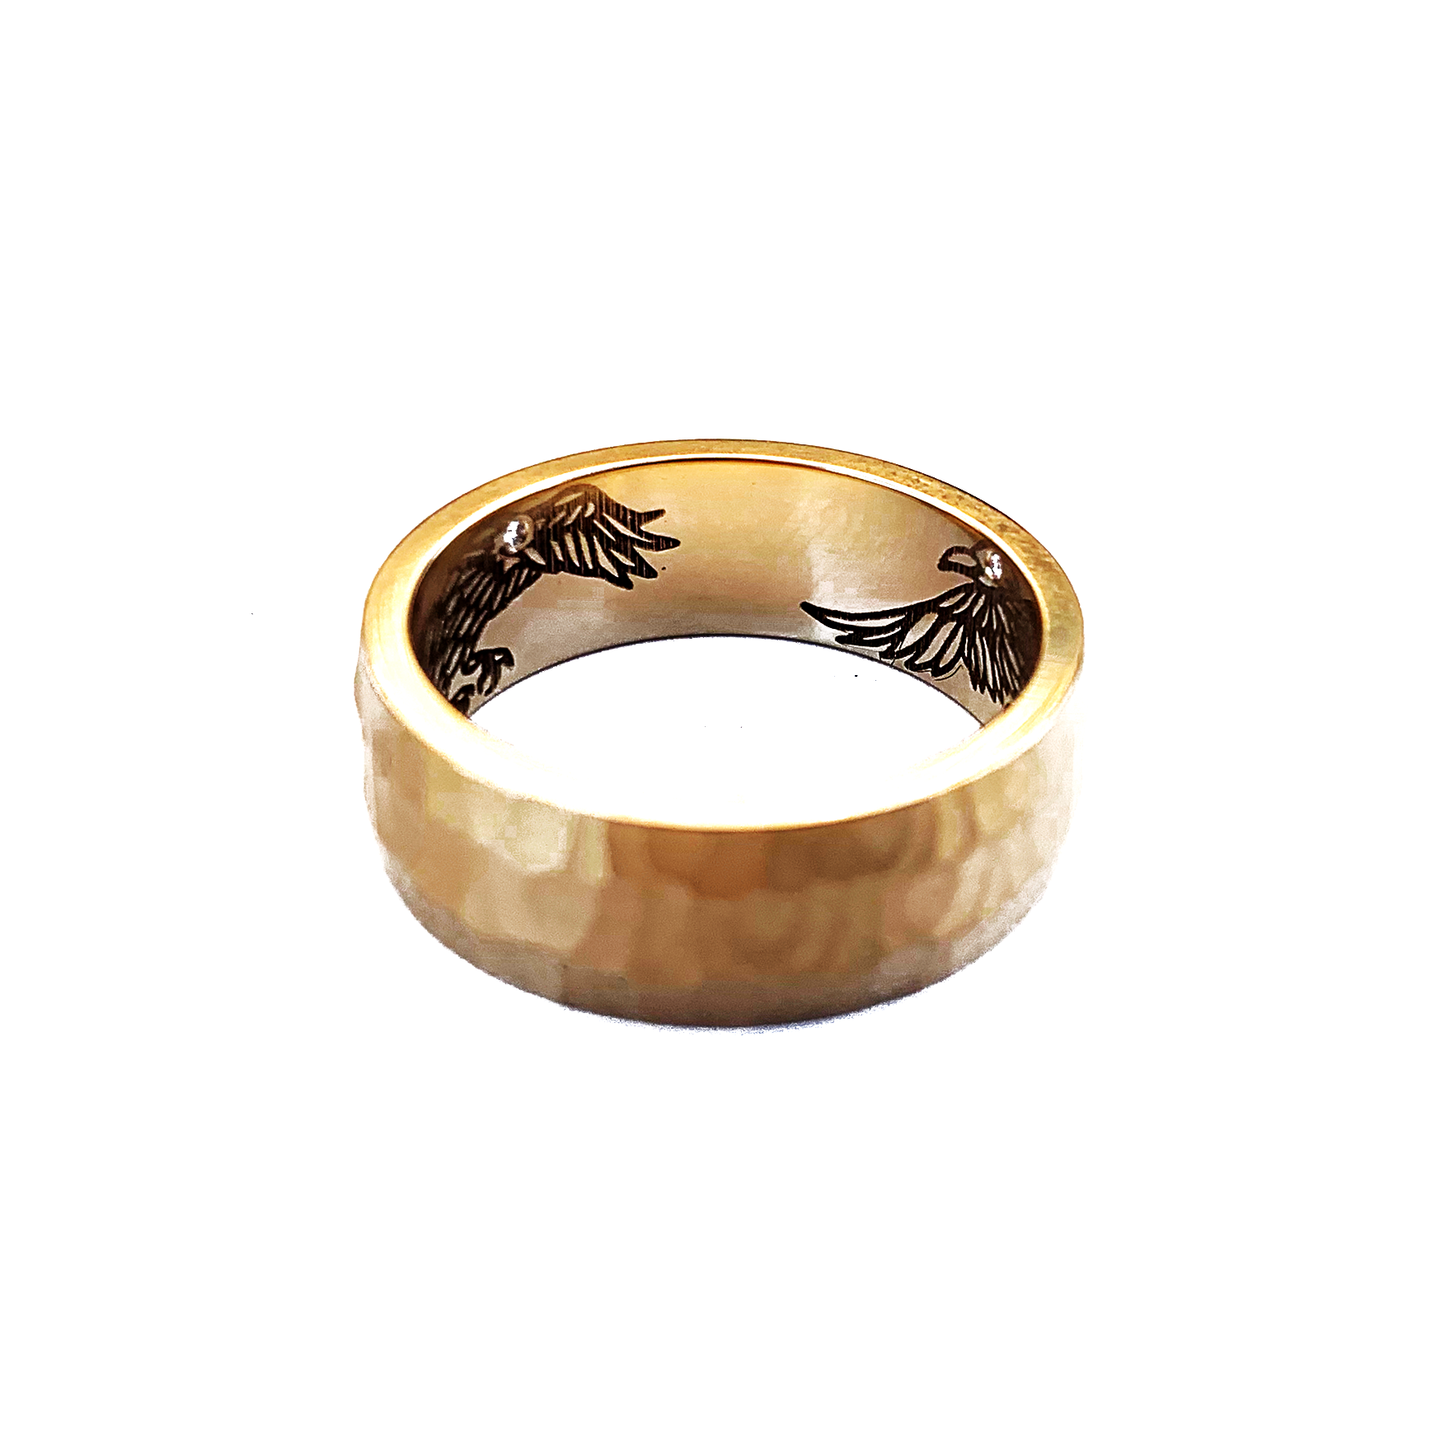 Hammered Satin Wedding Ring with Surprise Engraving